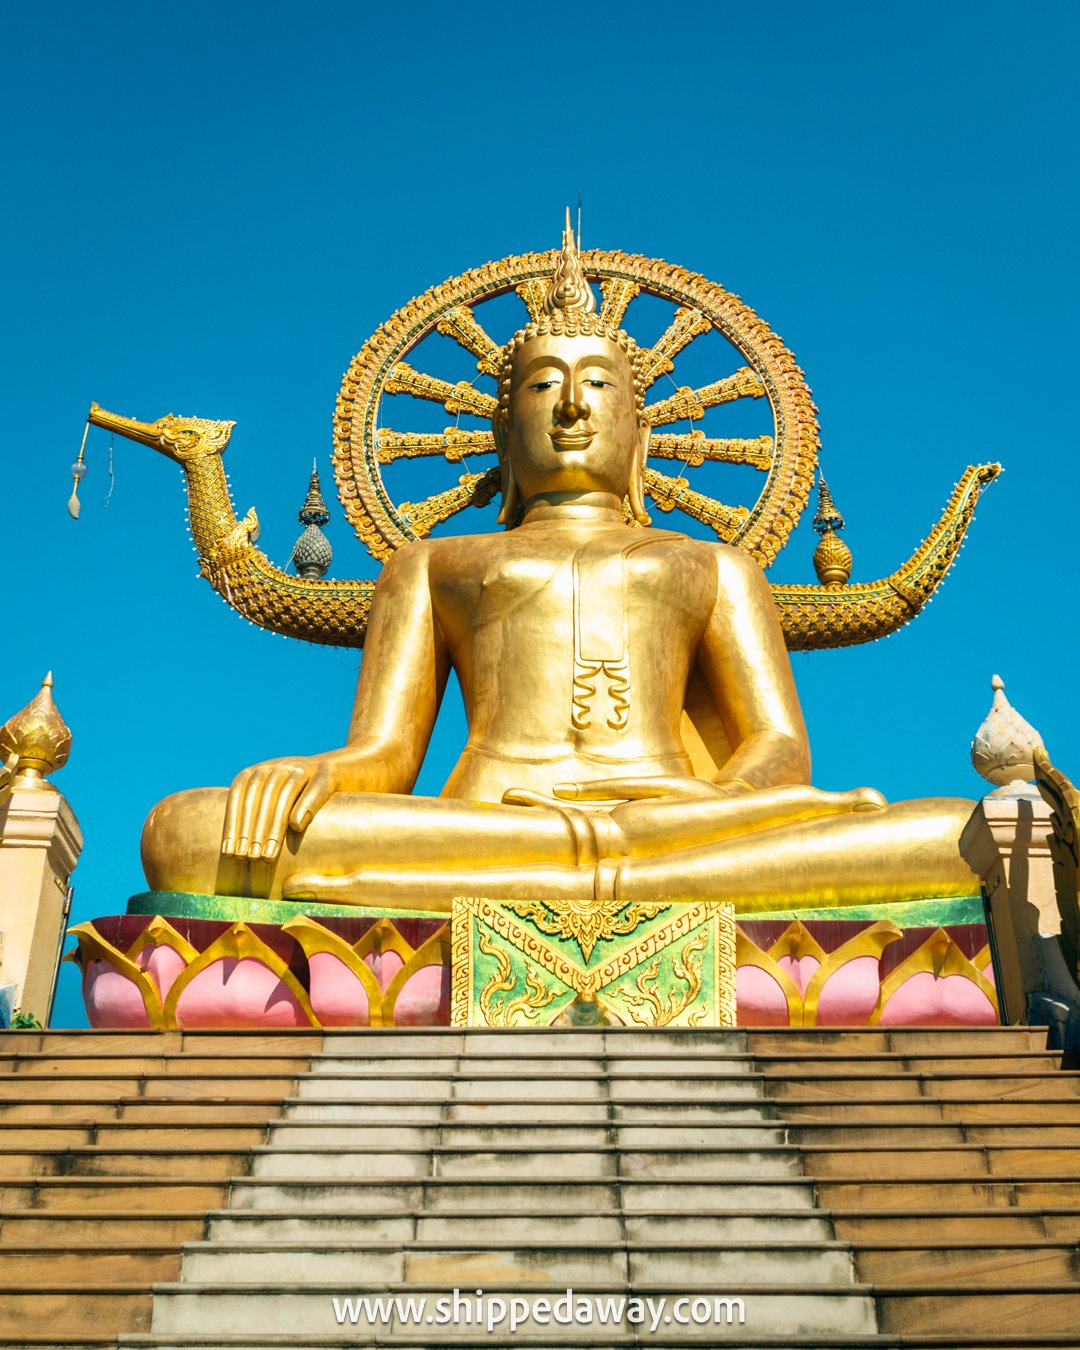 Big Buddha of Koh Samui, Thailand